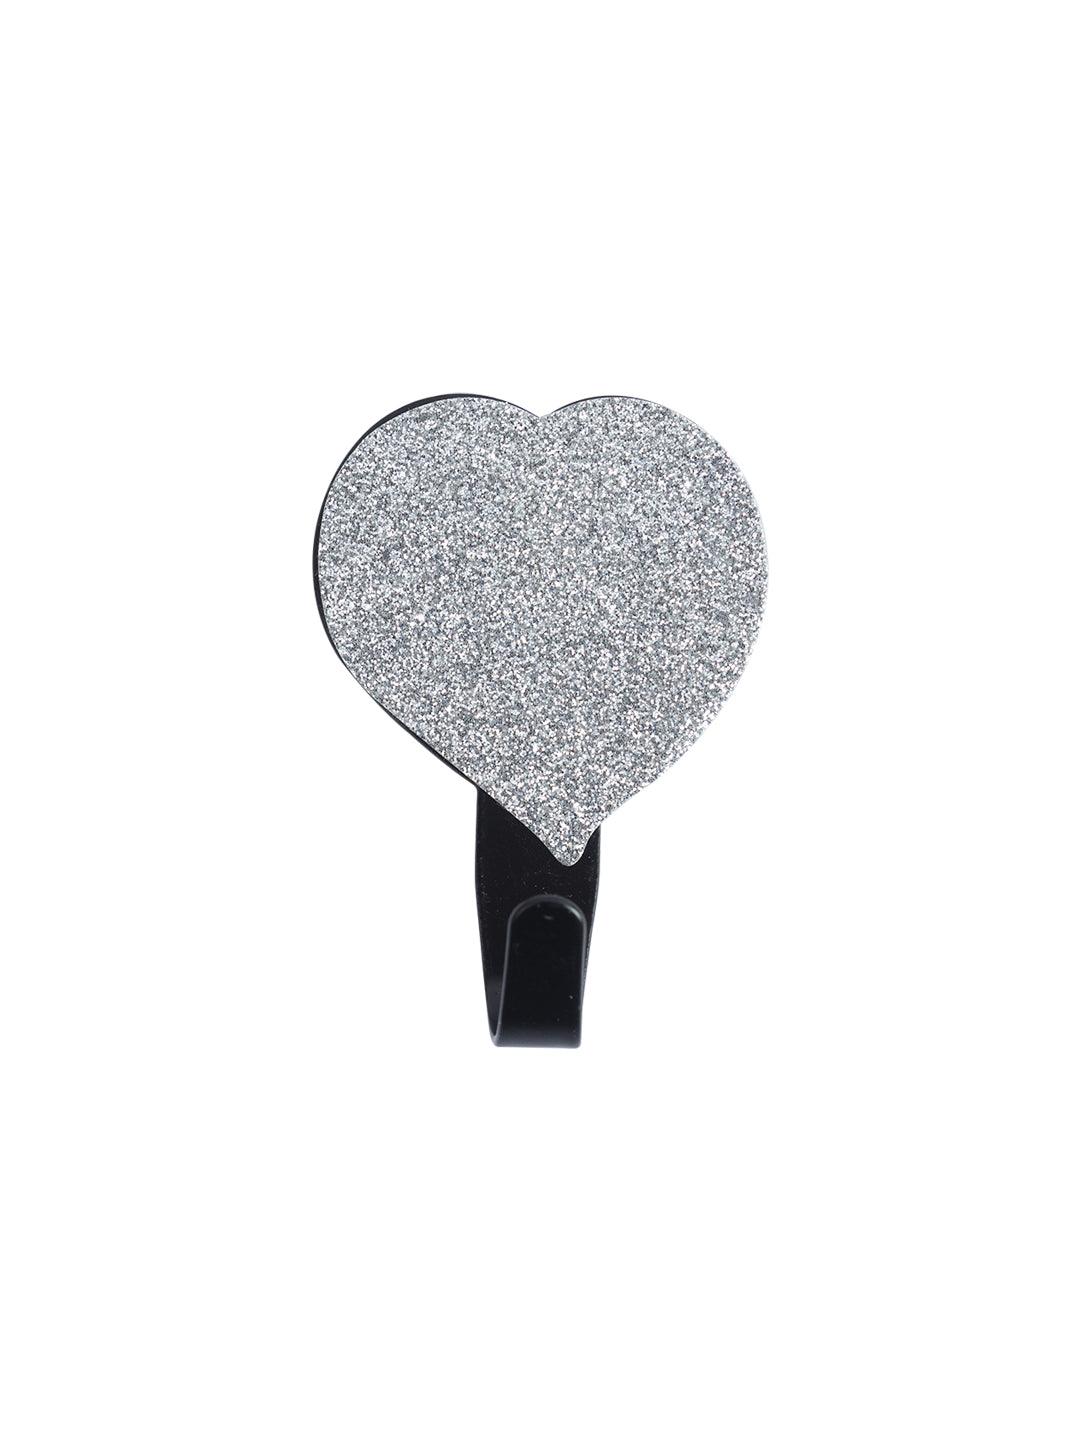 Market 99 Sticky Hook Pack Of 2 Pcs, Shimmering Heart, Silver, Plastic - MARKET 99